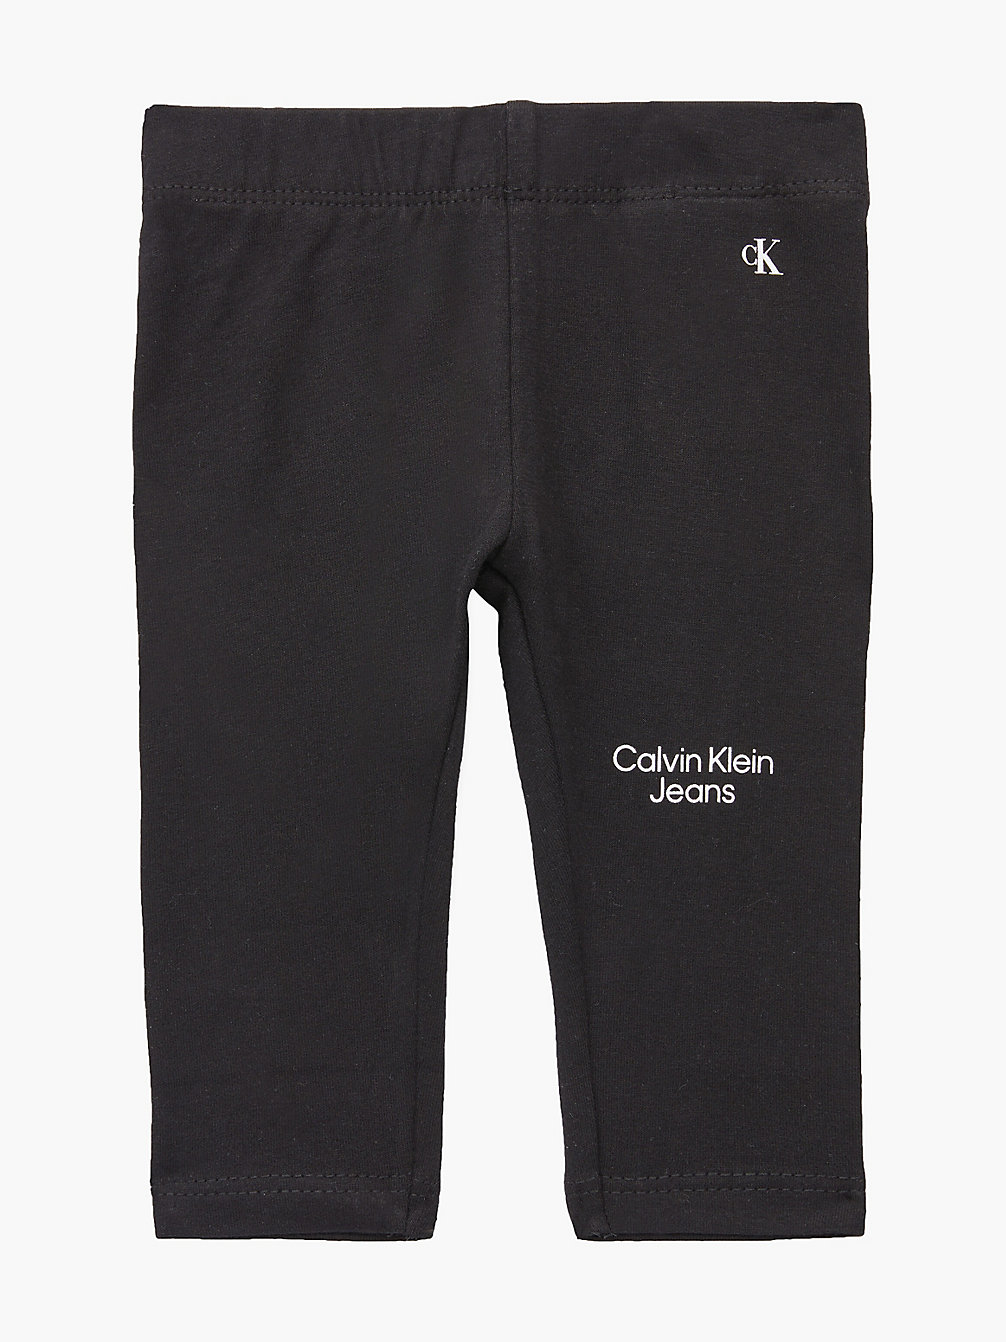 CK BLACK Newborn Leggings undefined newborn Calvin Klein